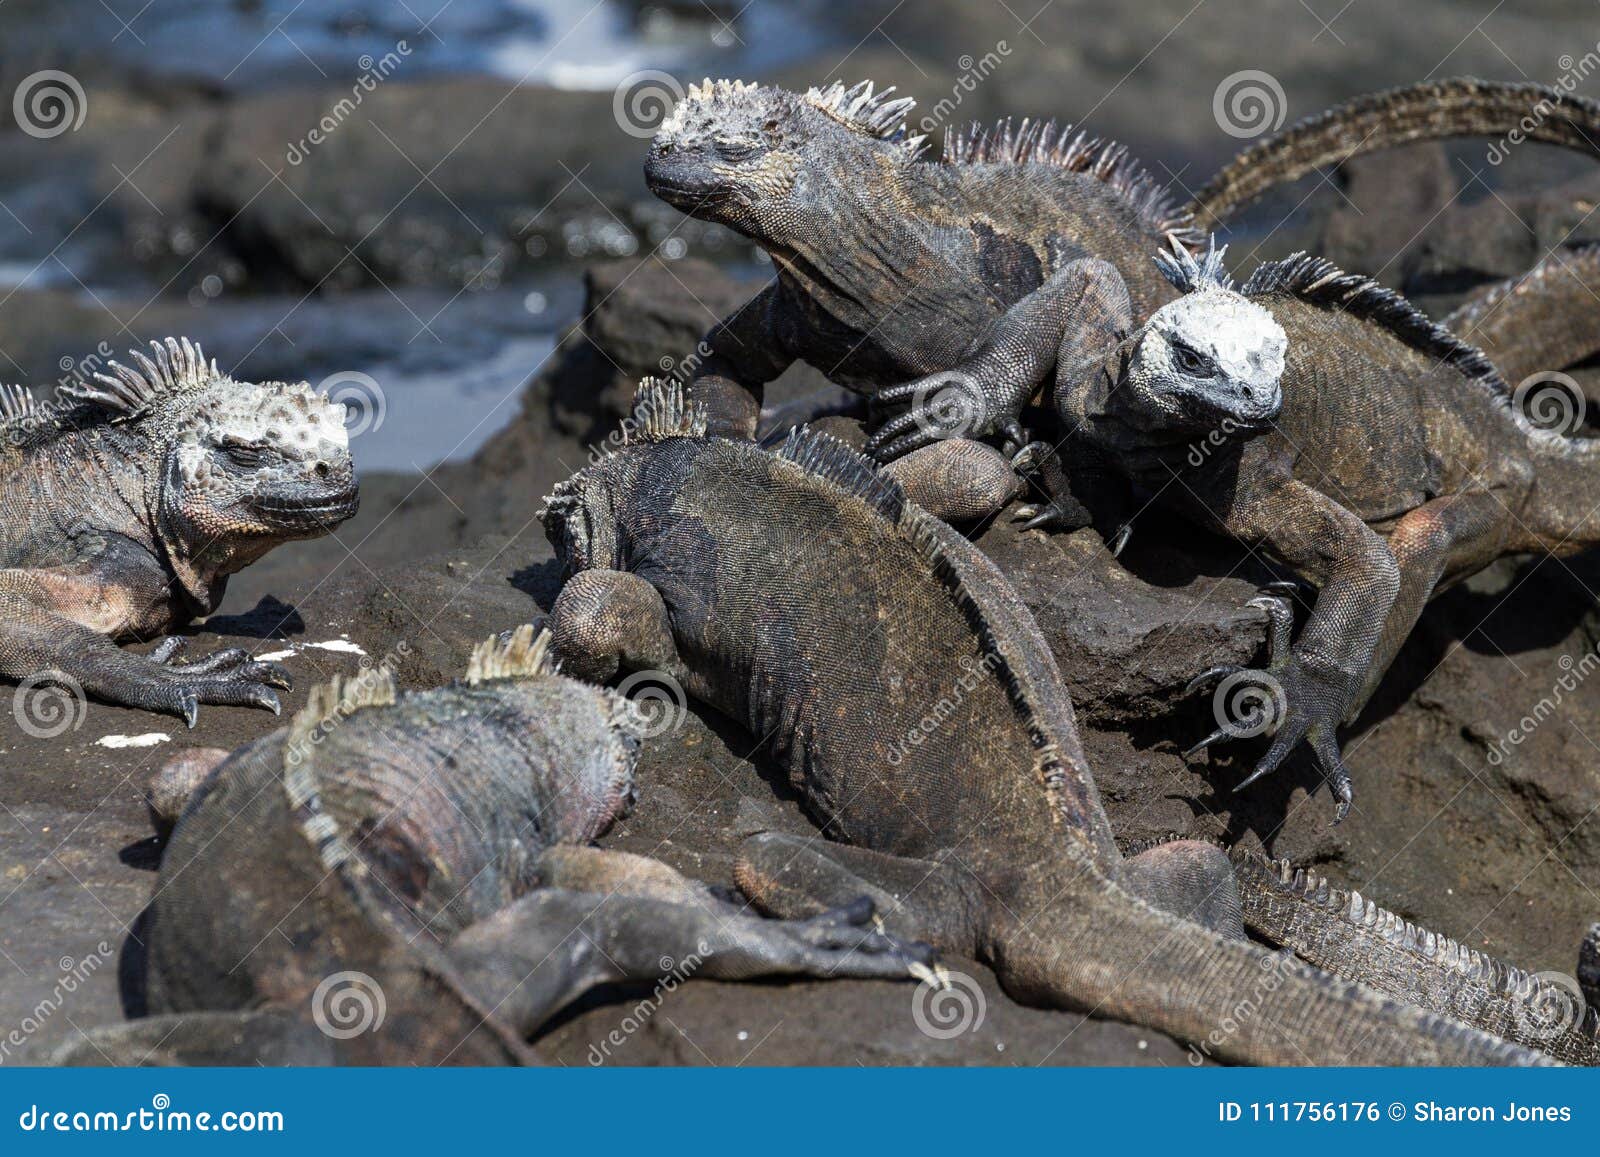 galapagos marine iguanas amblyrhynchus cristatus on lava rock, galapagos islands